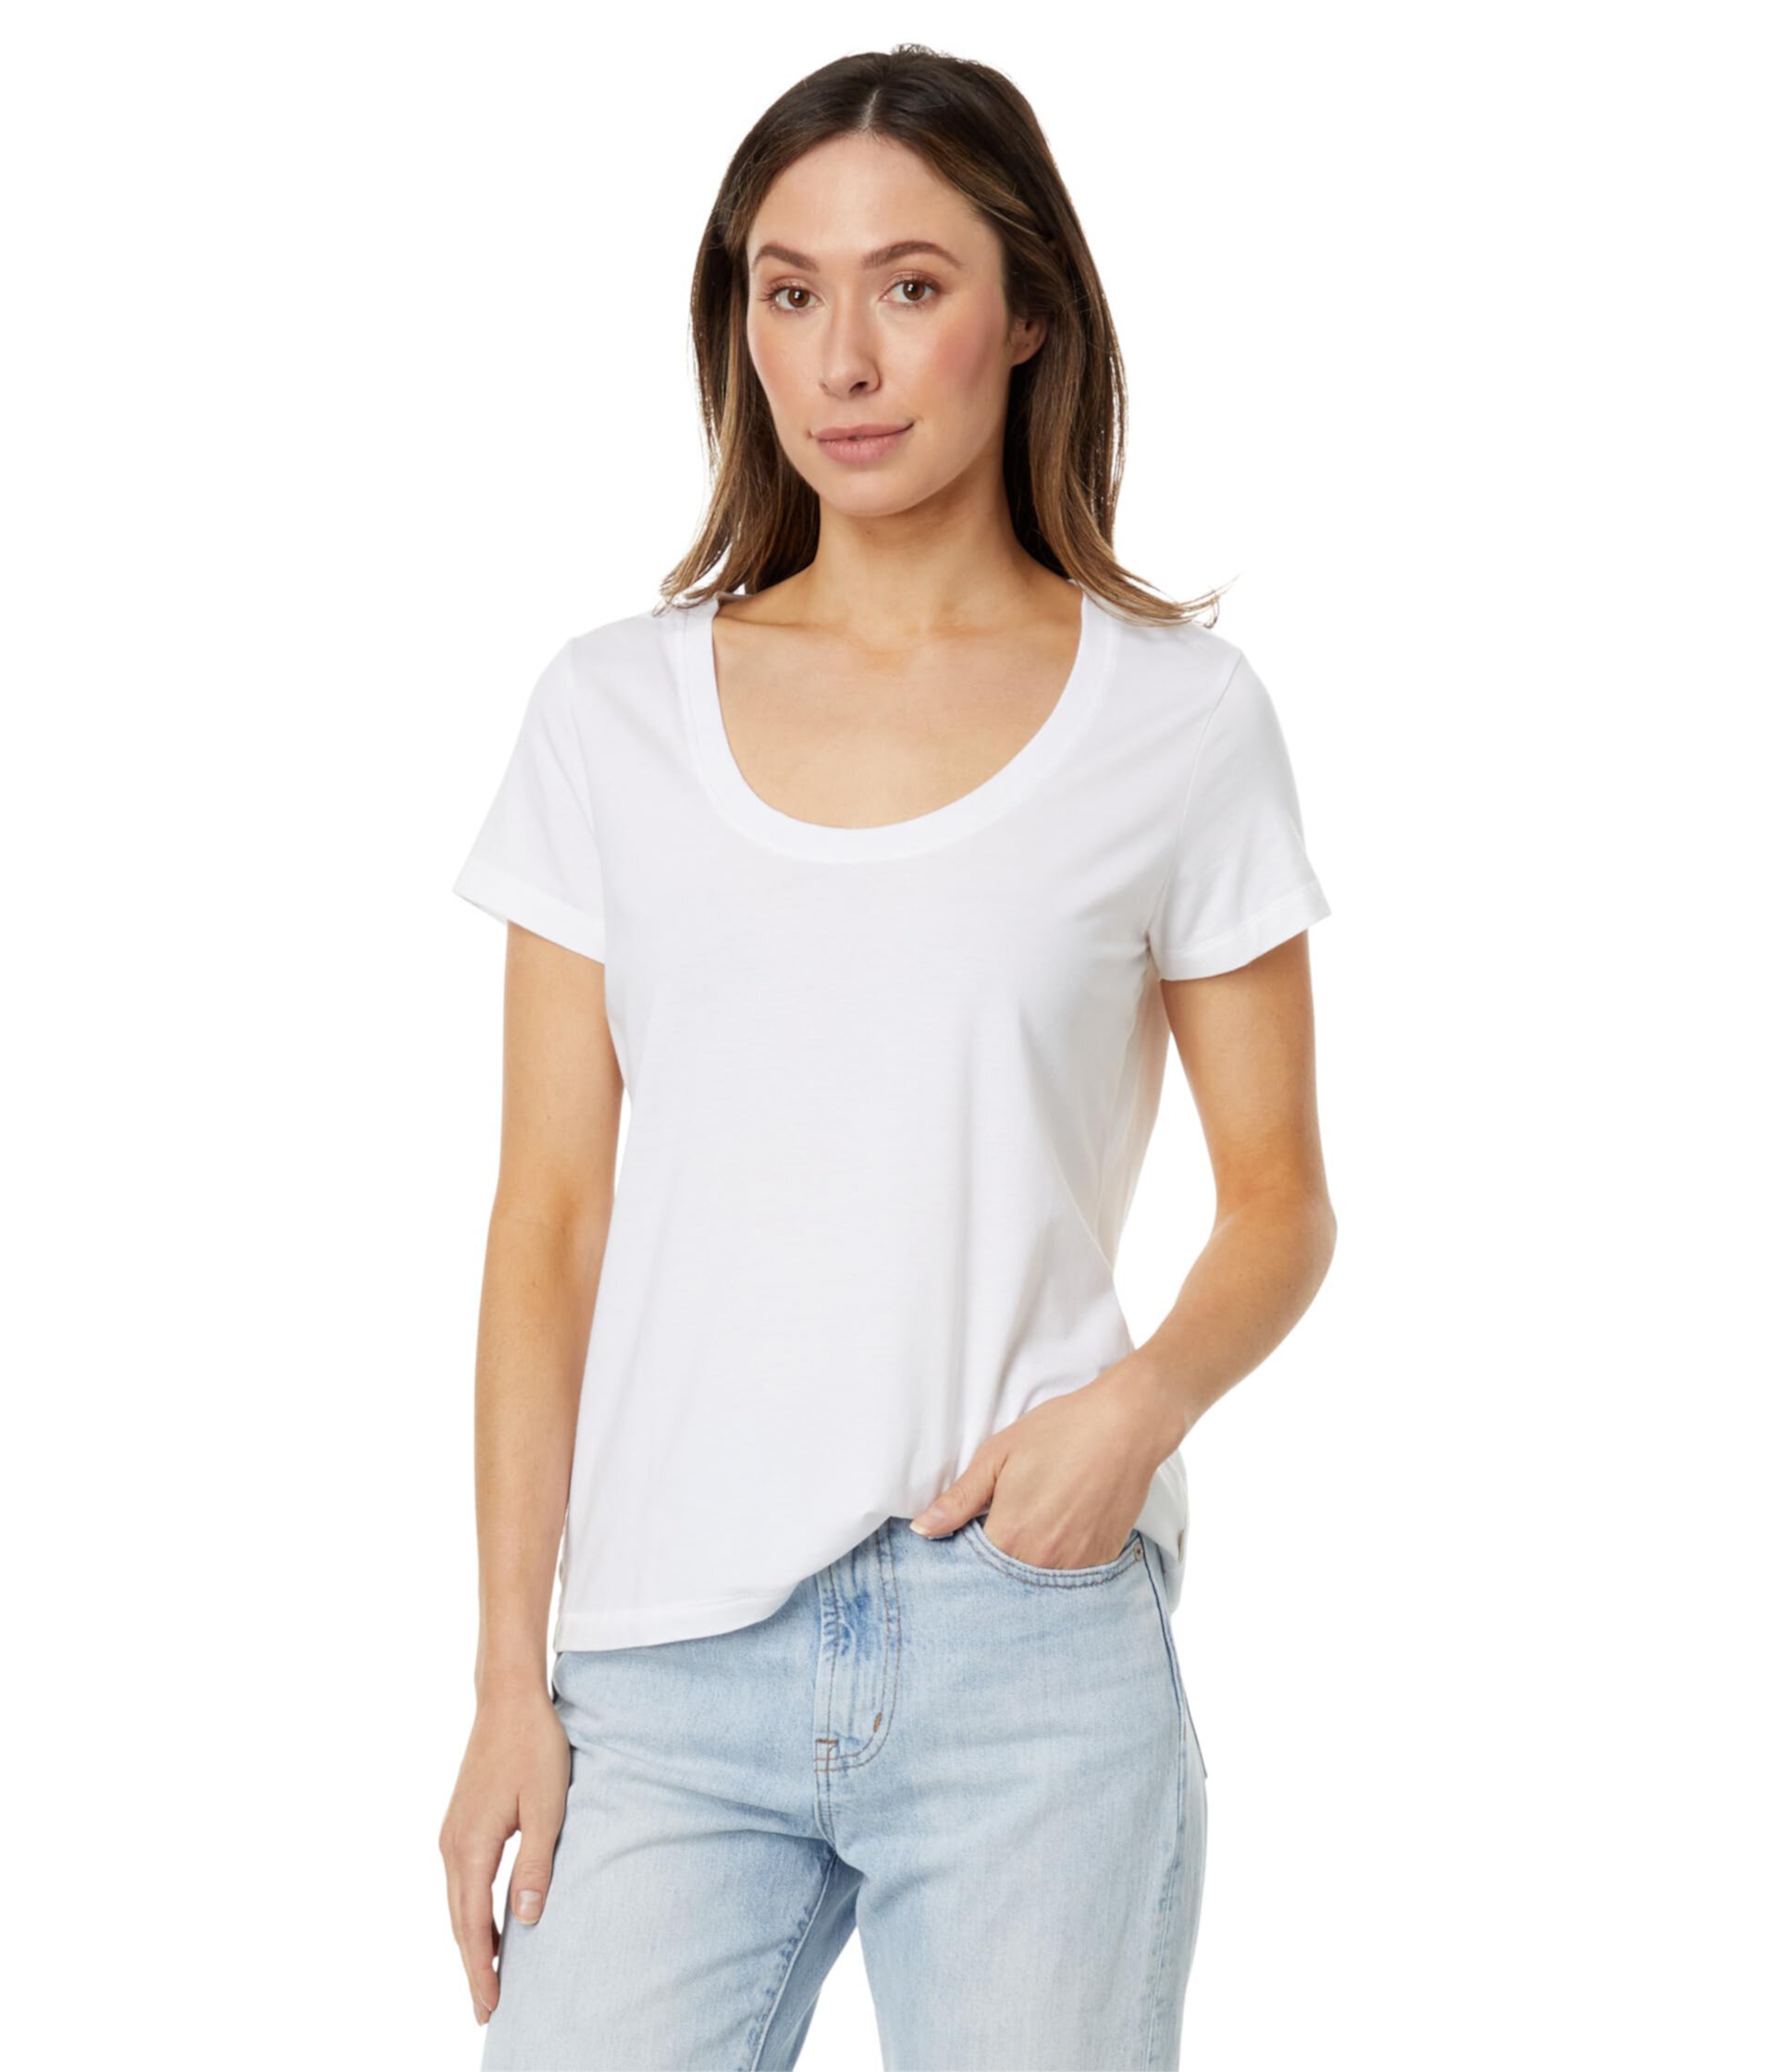 Мягкая эластичная футболка Petite Supima с круглым вырезом и короткими рукавами L.L.Bean